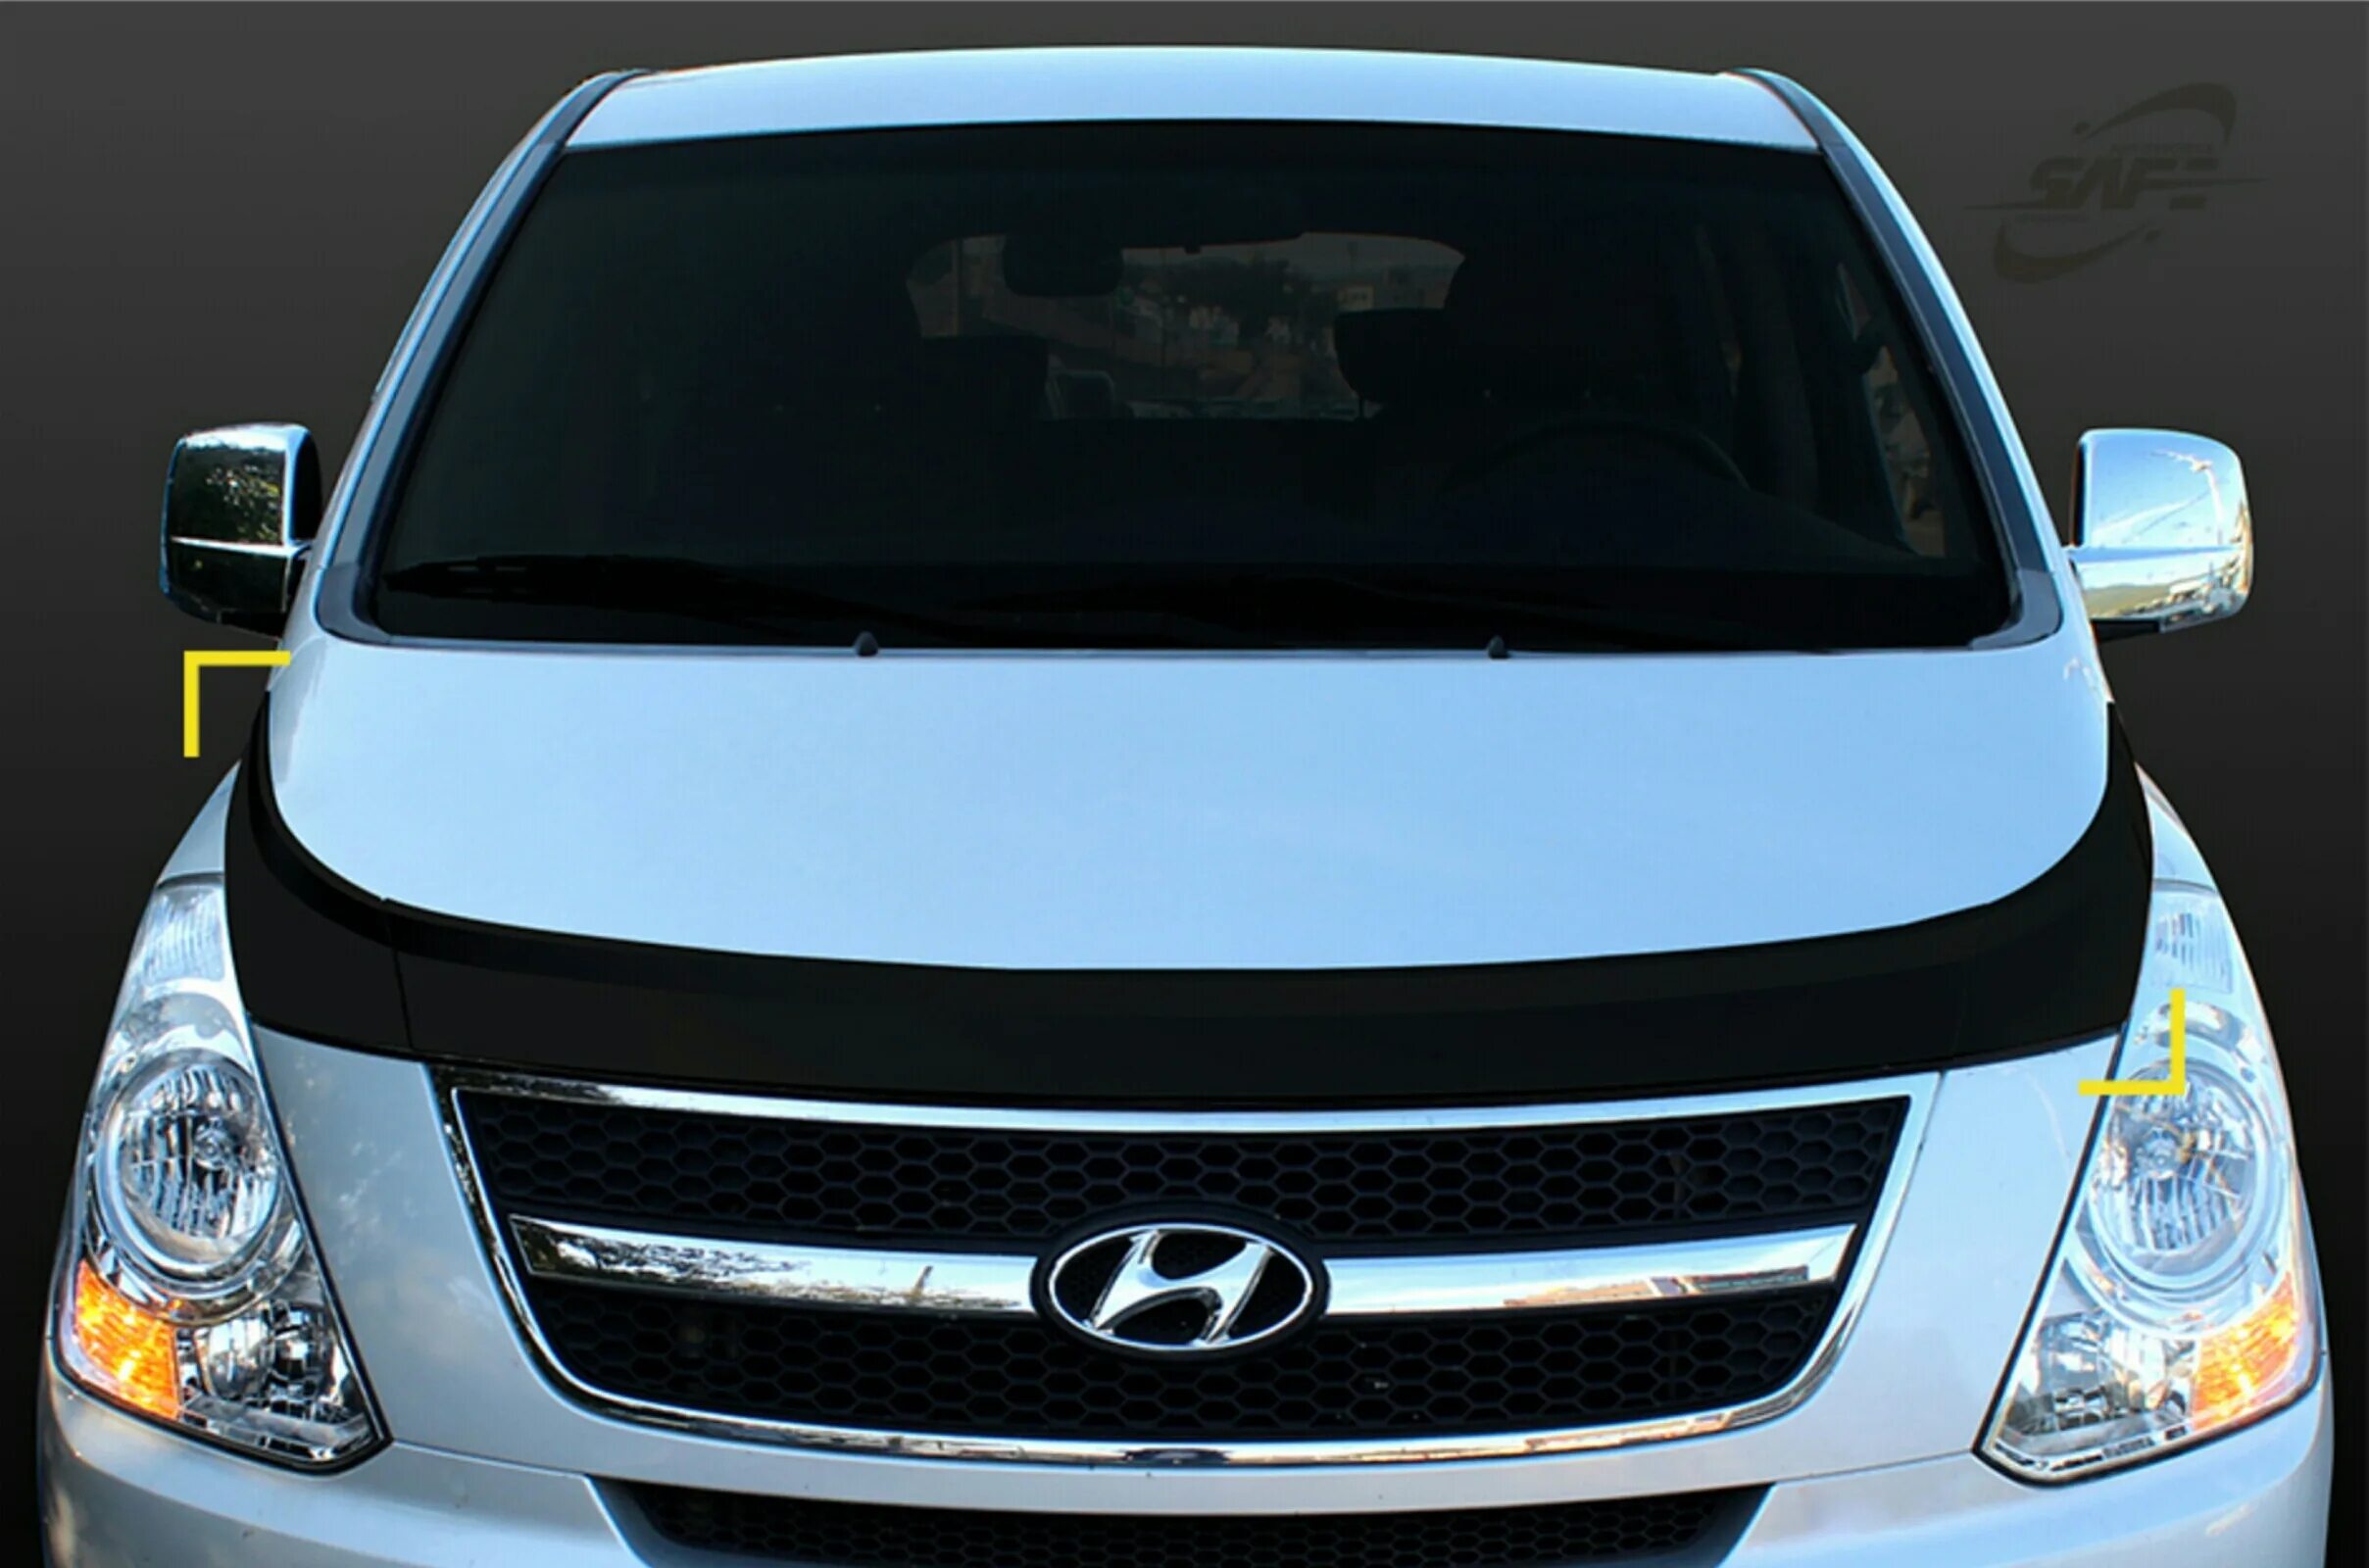 Дефлекторы Hyundai h1 2007. Дефлектор на капот Hyundai Grand Starex 2018. Дефлектор капота Hyundai Grand Starex. Дефлектор капота Гранд Старекс 2019.